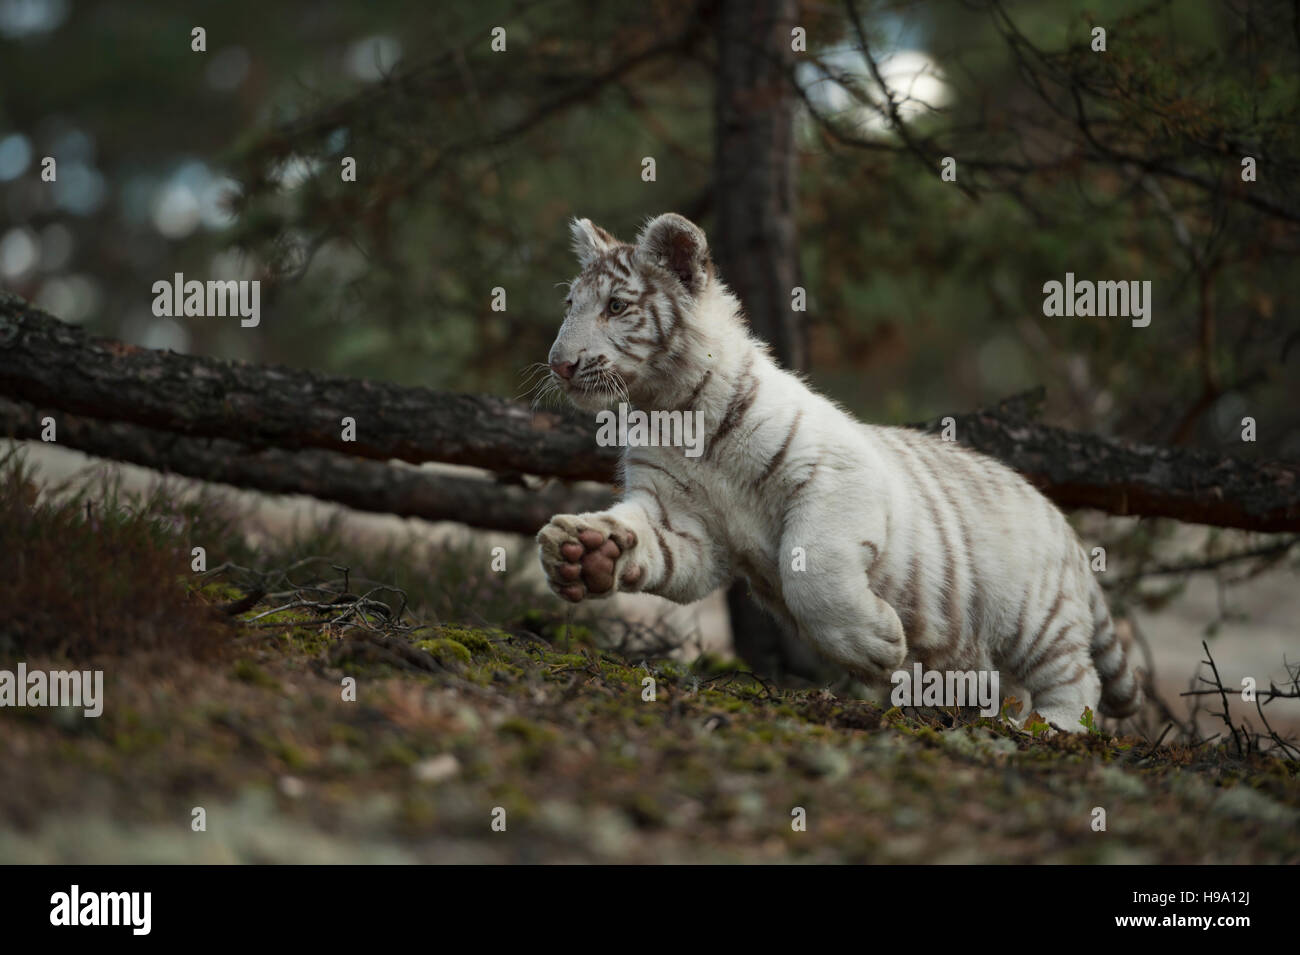 Royal Bengal Tiger / Koenigstiger ( Panthera tigris ), white morph, running, jumping through a natural forest, low point of view. Stock Photo